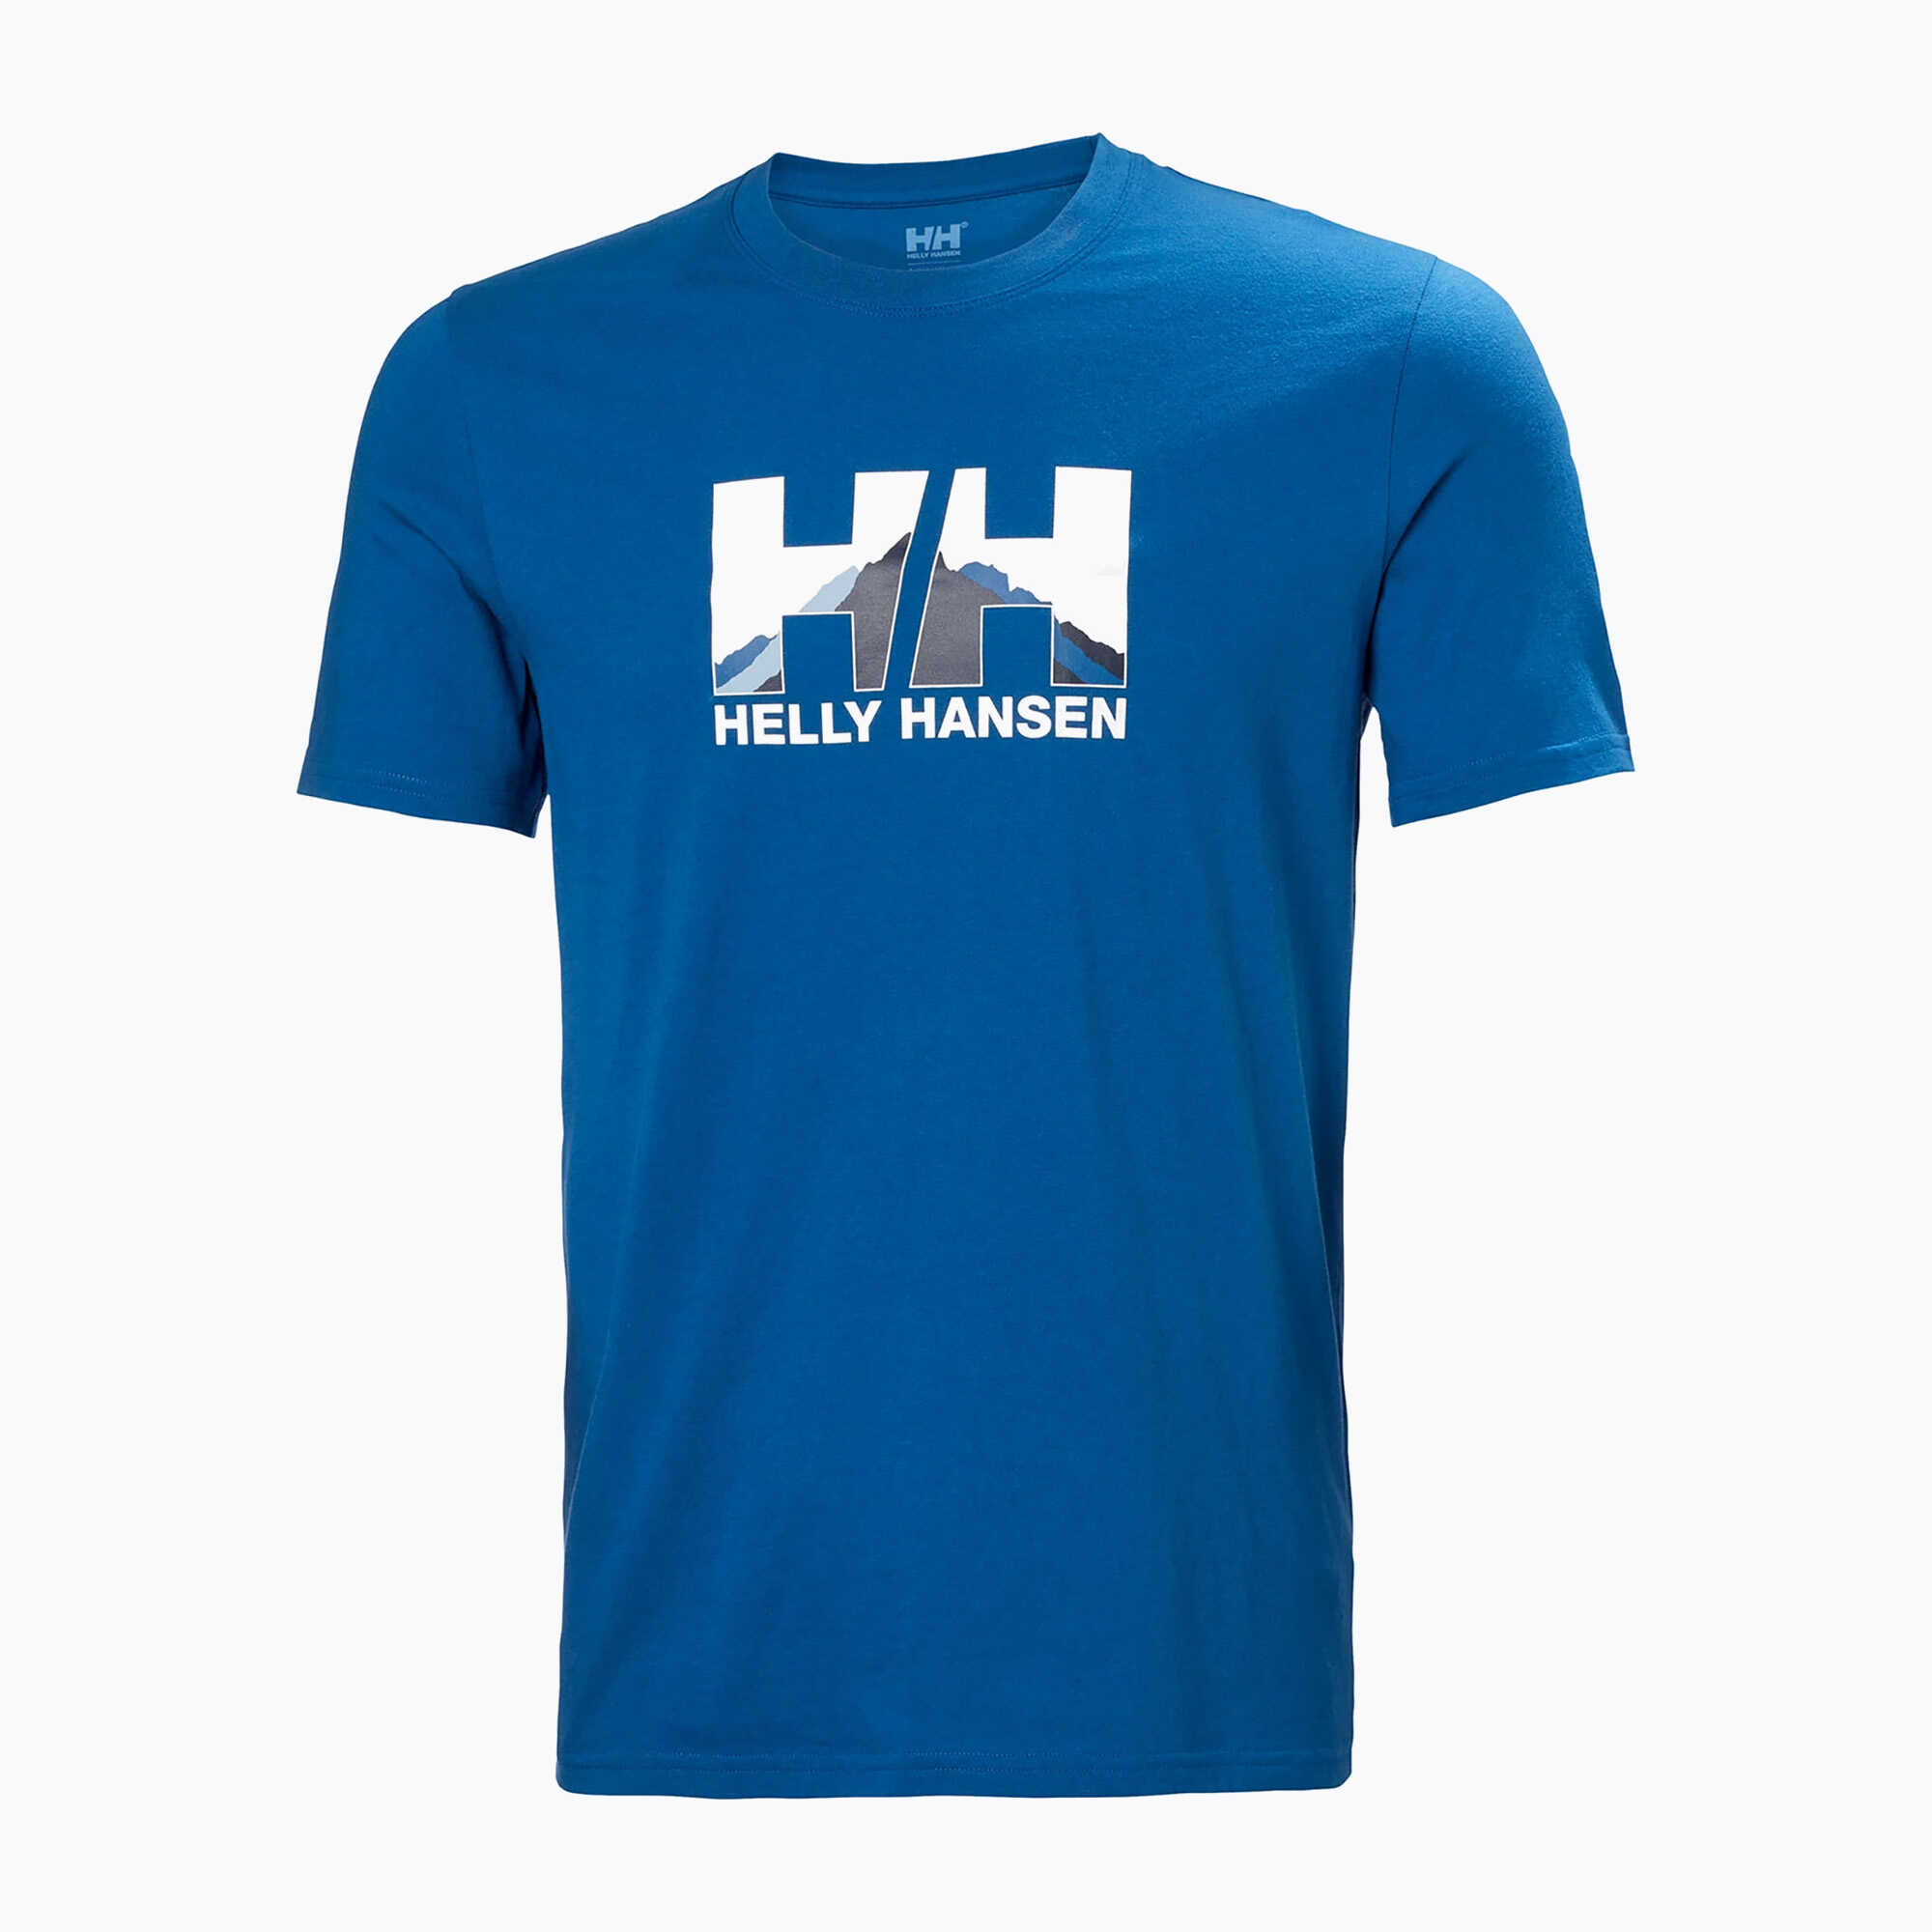 Koszulka trekkingowa męska Helly Hansen Nord Graphic niebieska 62978_606 WYSYŁKA W 24H 30 DNI NA ZWROT